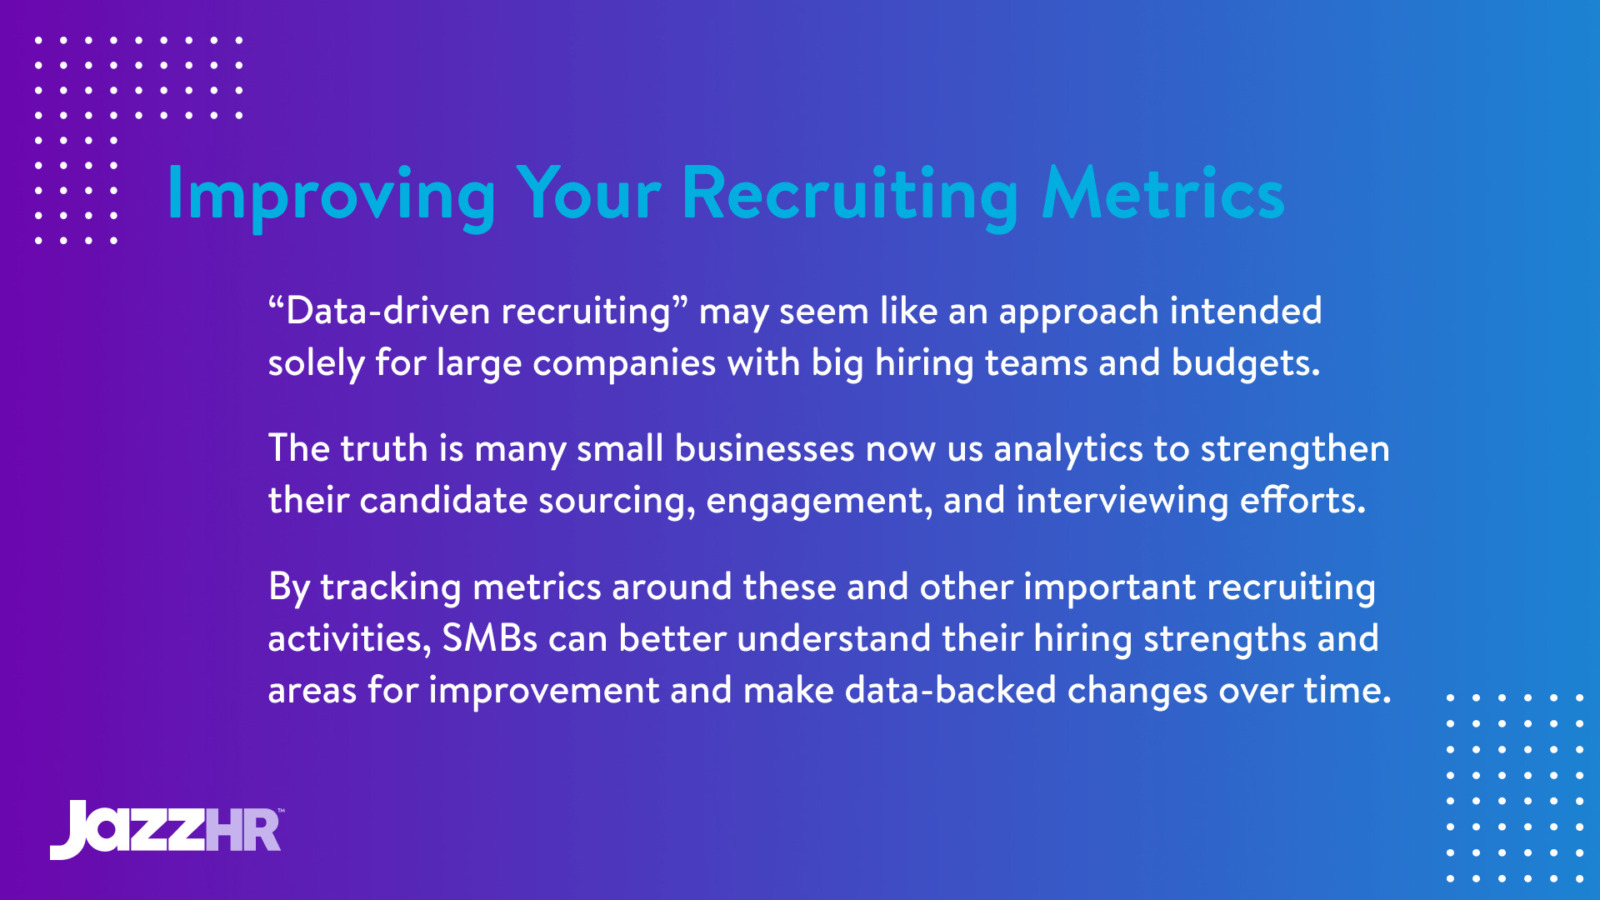 recruitment metrics